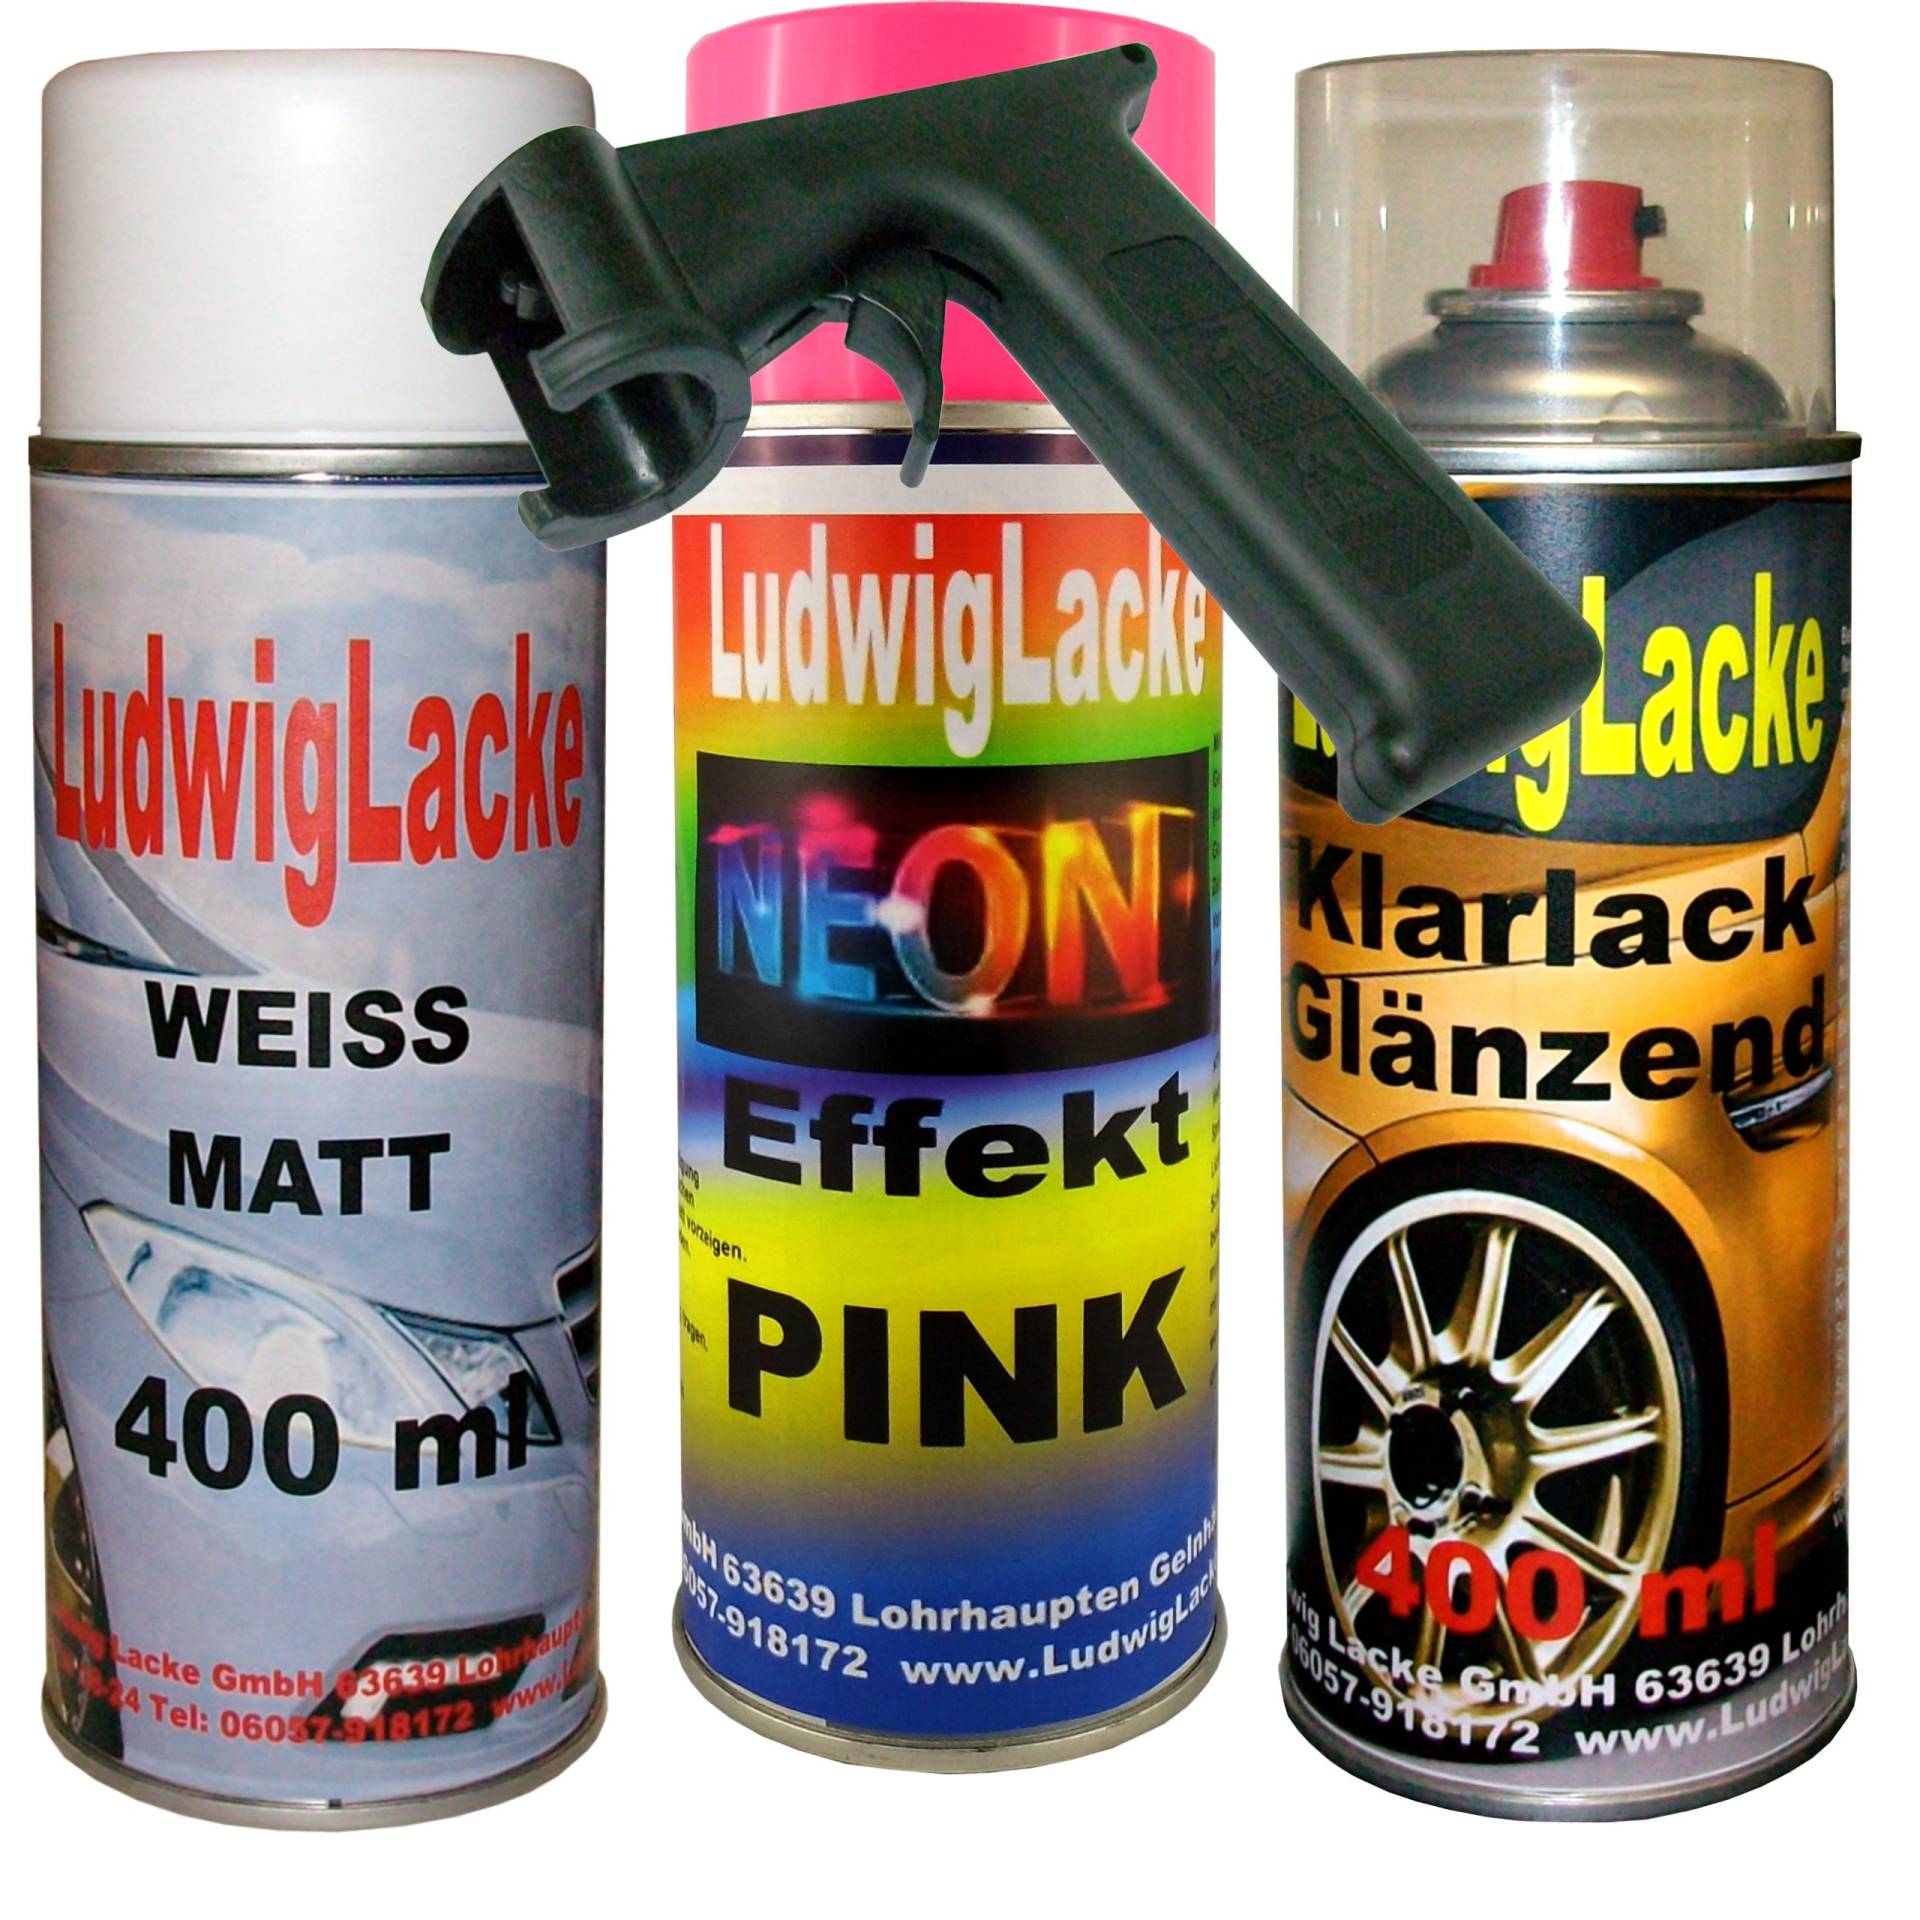 Ludwiglacke Neon Lack Spray Set pink 3 Spraydosen a 400ml + Spraydosen Handgriff von Ludwiglacke